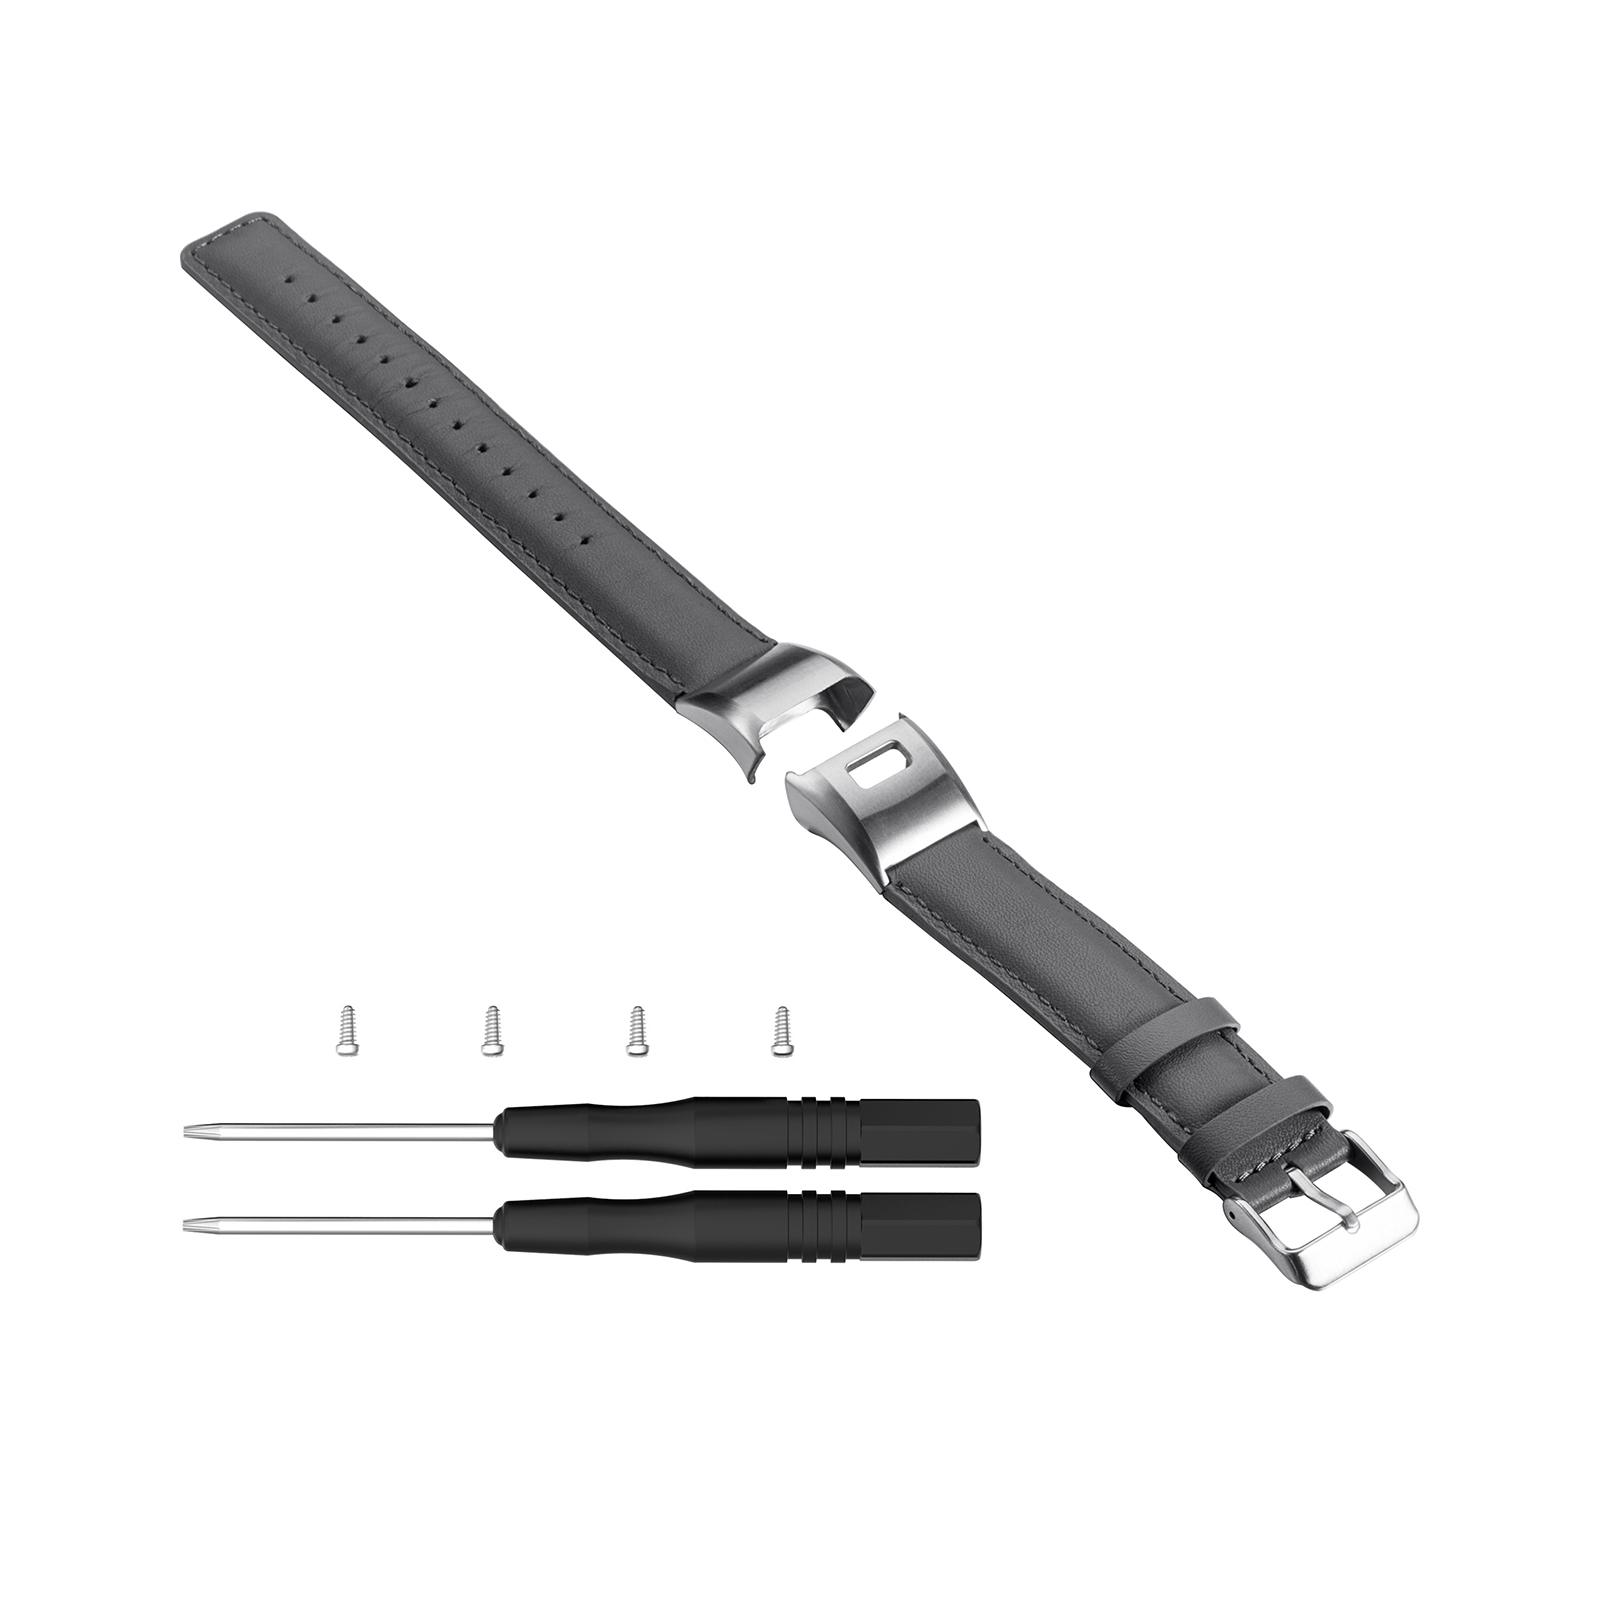 Bakeey-Retro-Metal-Buckle-Leather-Strap-Smart-Watch-Band-For-Garmin-Vivosmart-HR-1739351-4